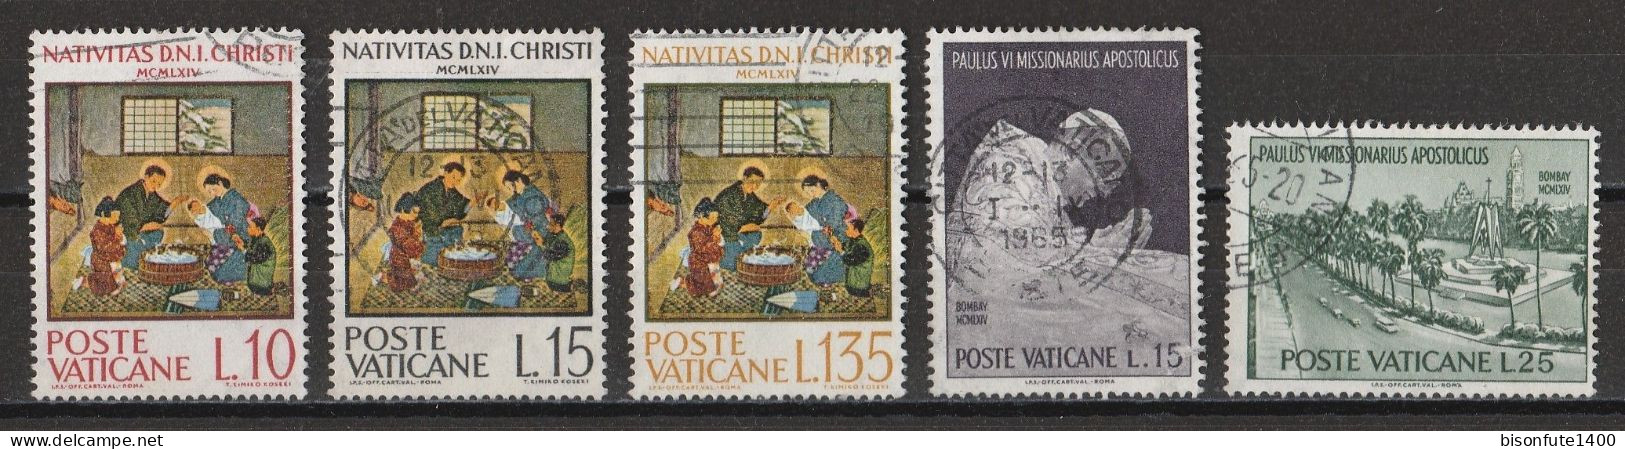 Vatican 1964 : Timbres Yvert & Tellier N° 415 - 416 - 417 - 418 - 419 - 420 Et 421 Oblitérés. - Usados